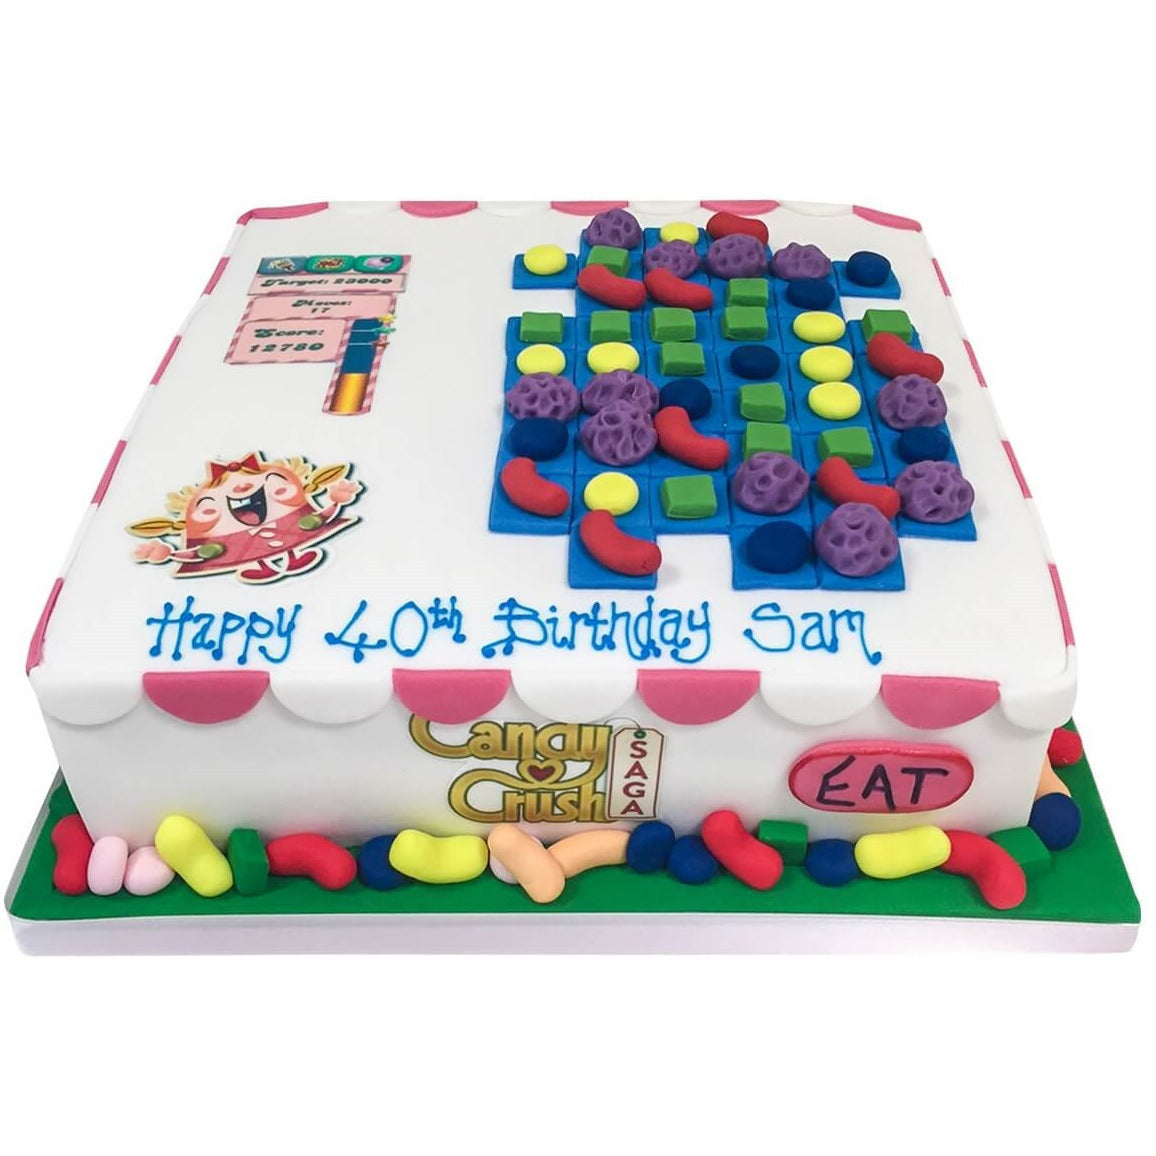 Cake Break - Whipped Cream Candy Crush theme cake | Facebook